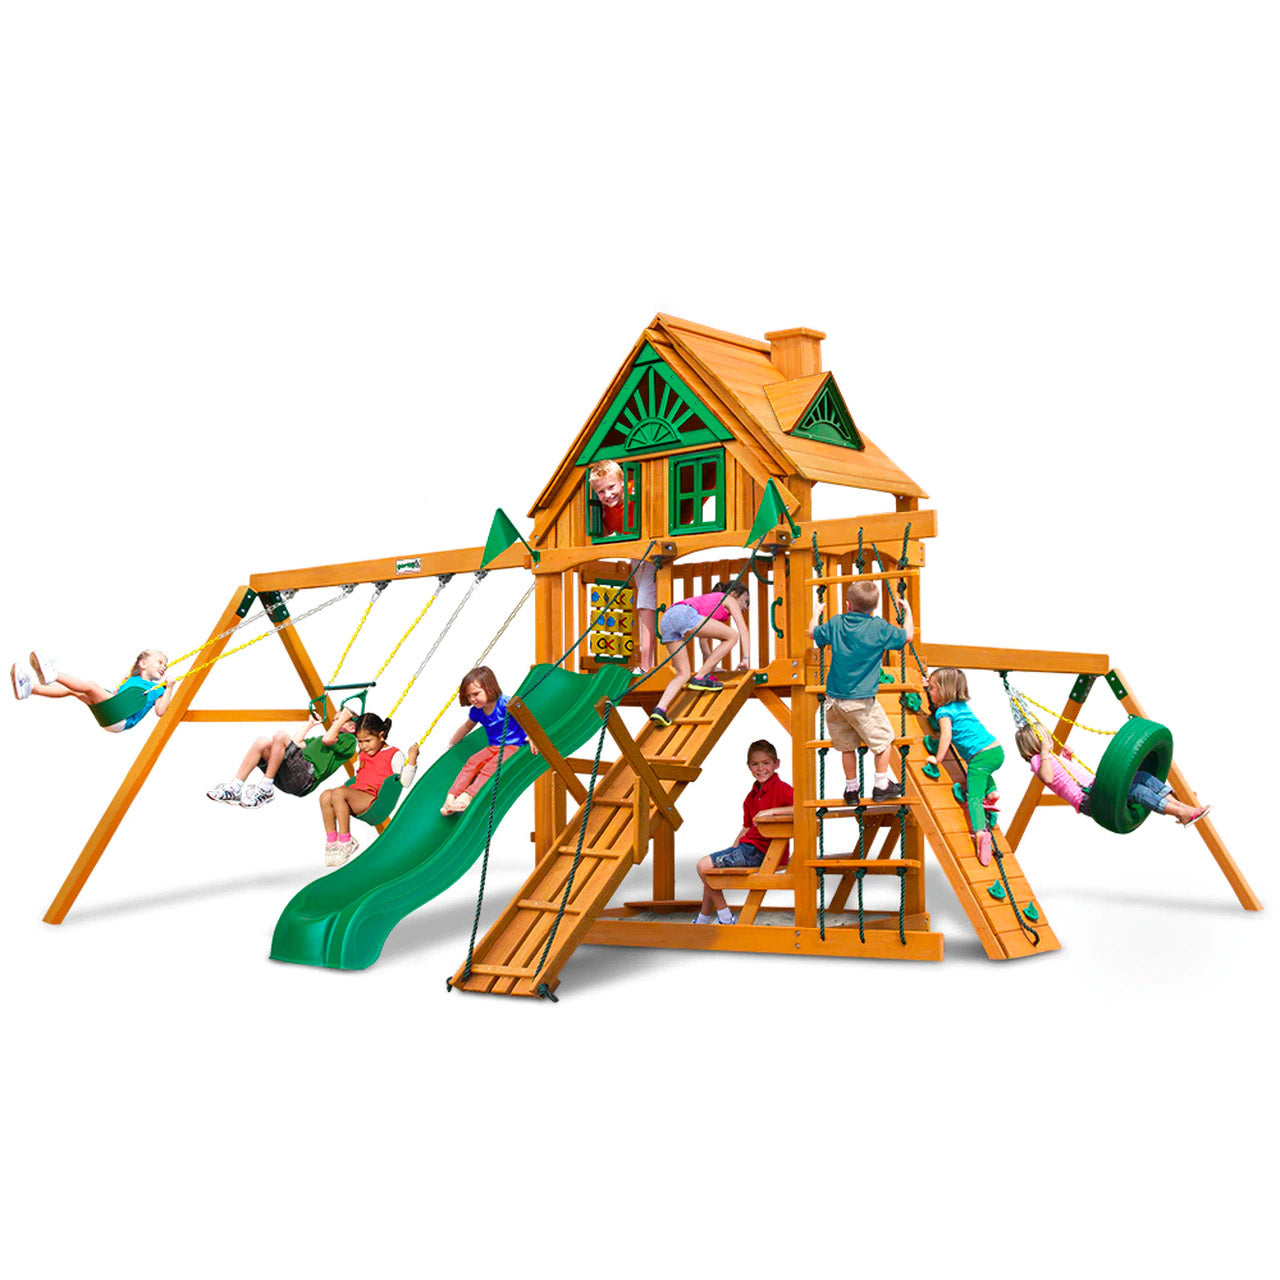 Frontier AP Wooden Swing Set | WillyGoat Playground & Park Equipment